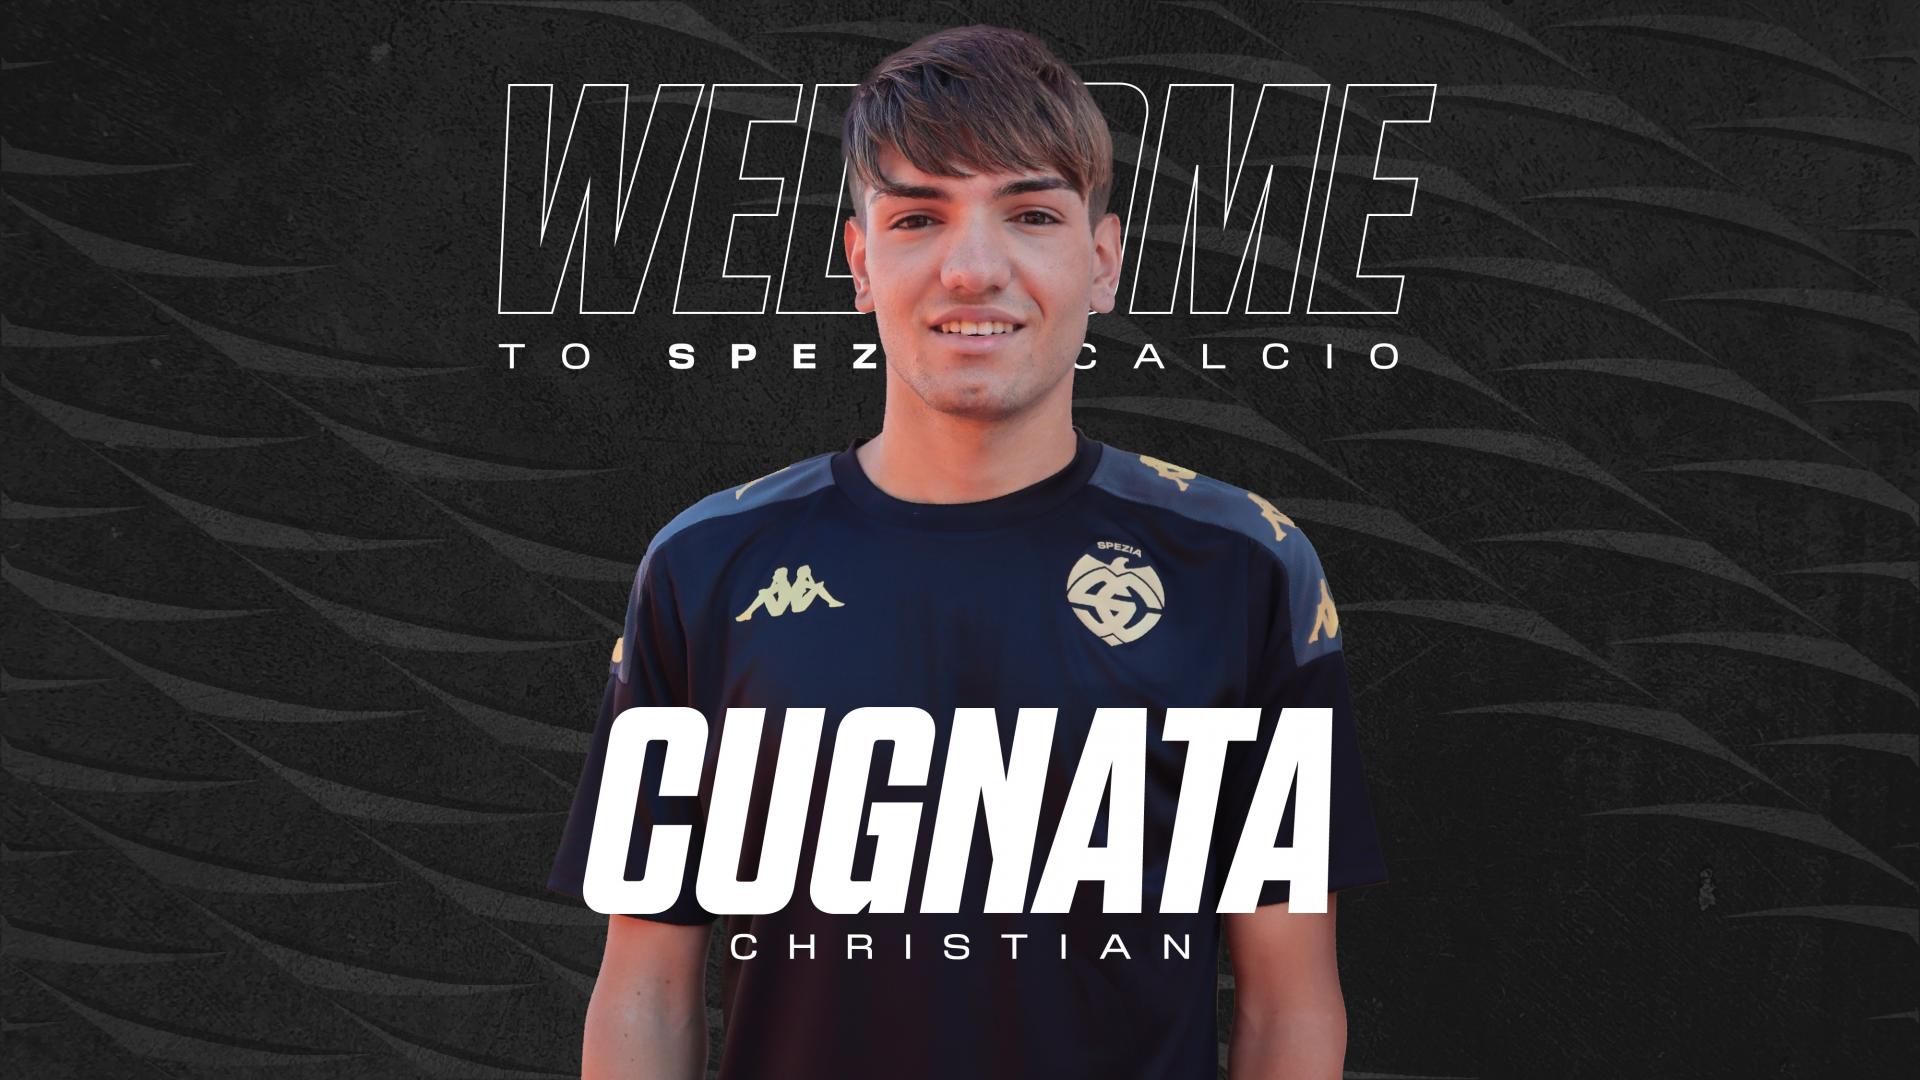 Official | Christian Cugnata is a new Spezia Calcio player